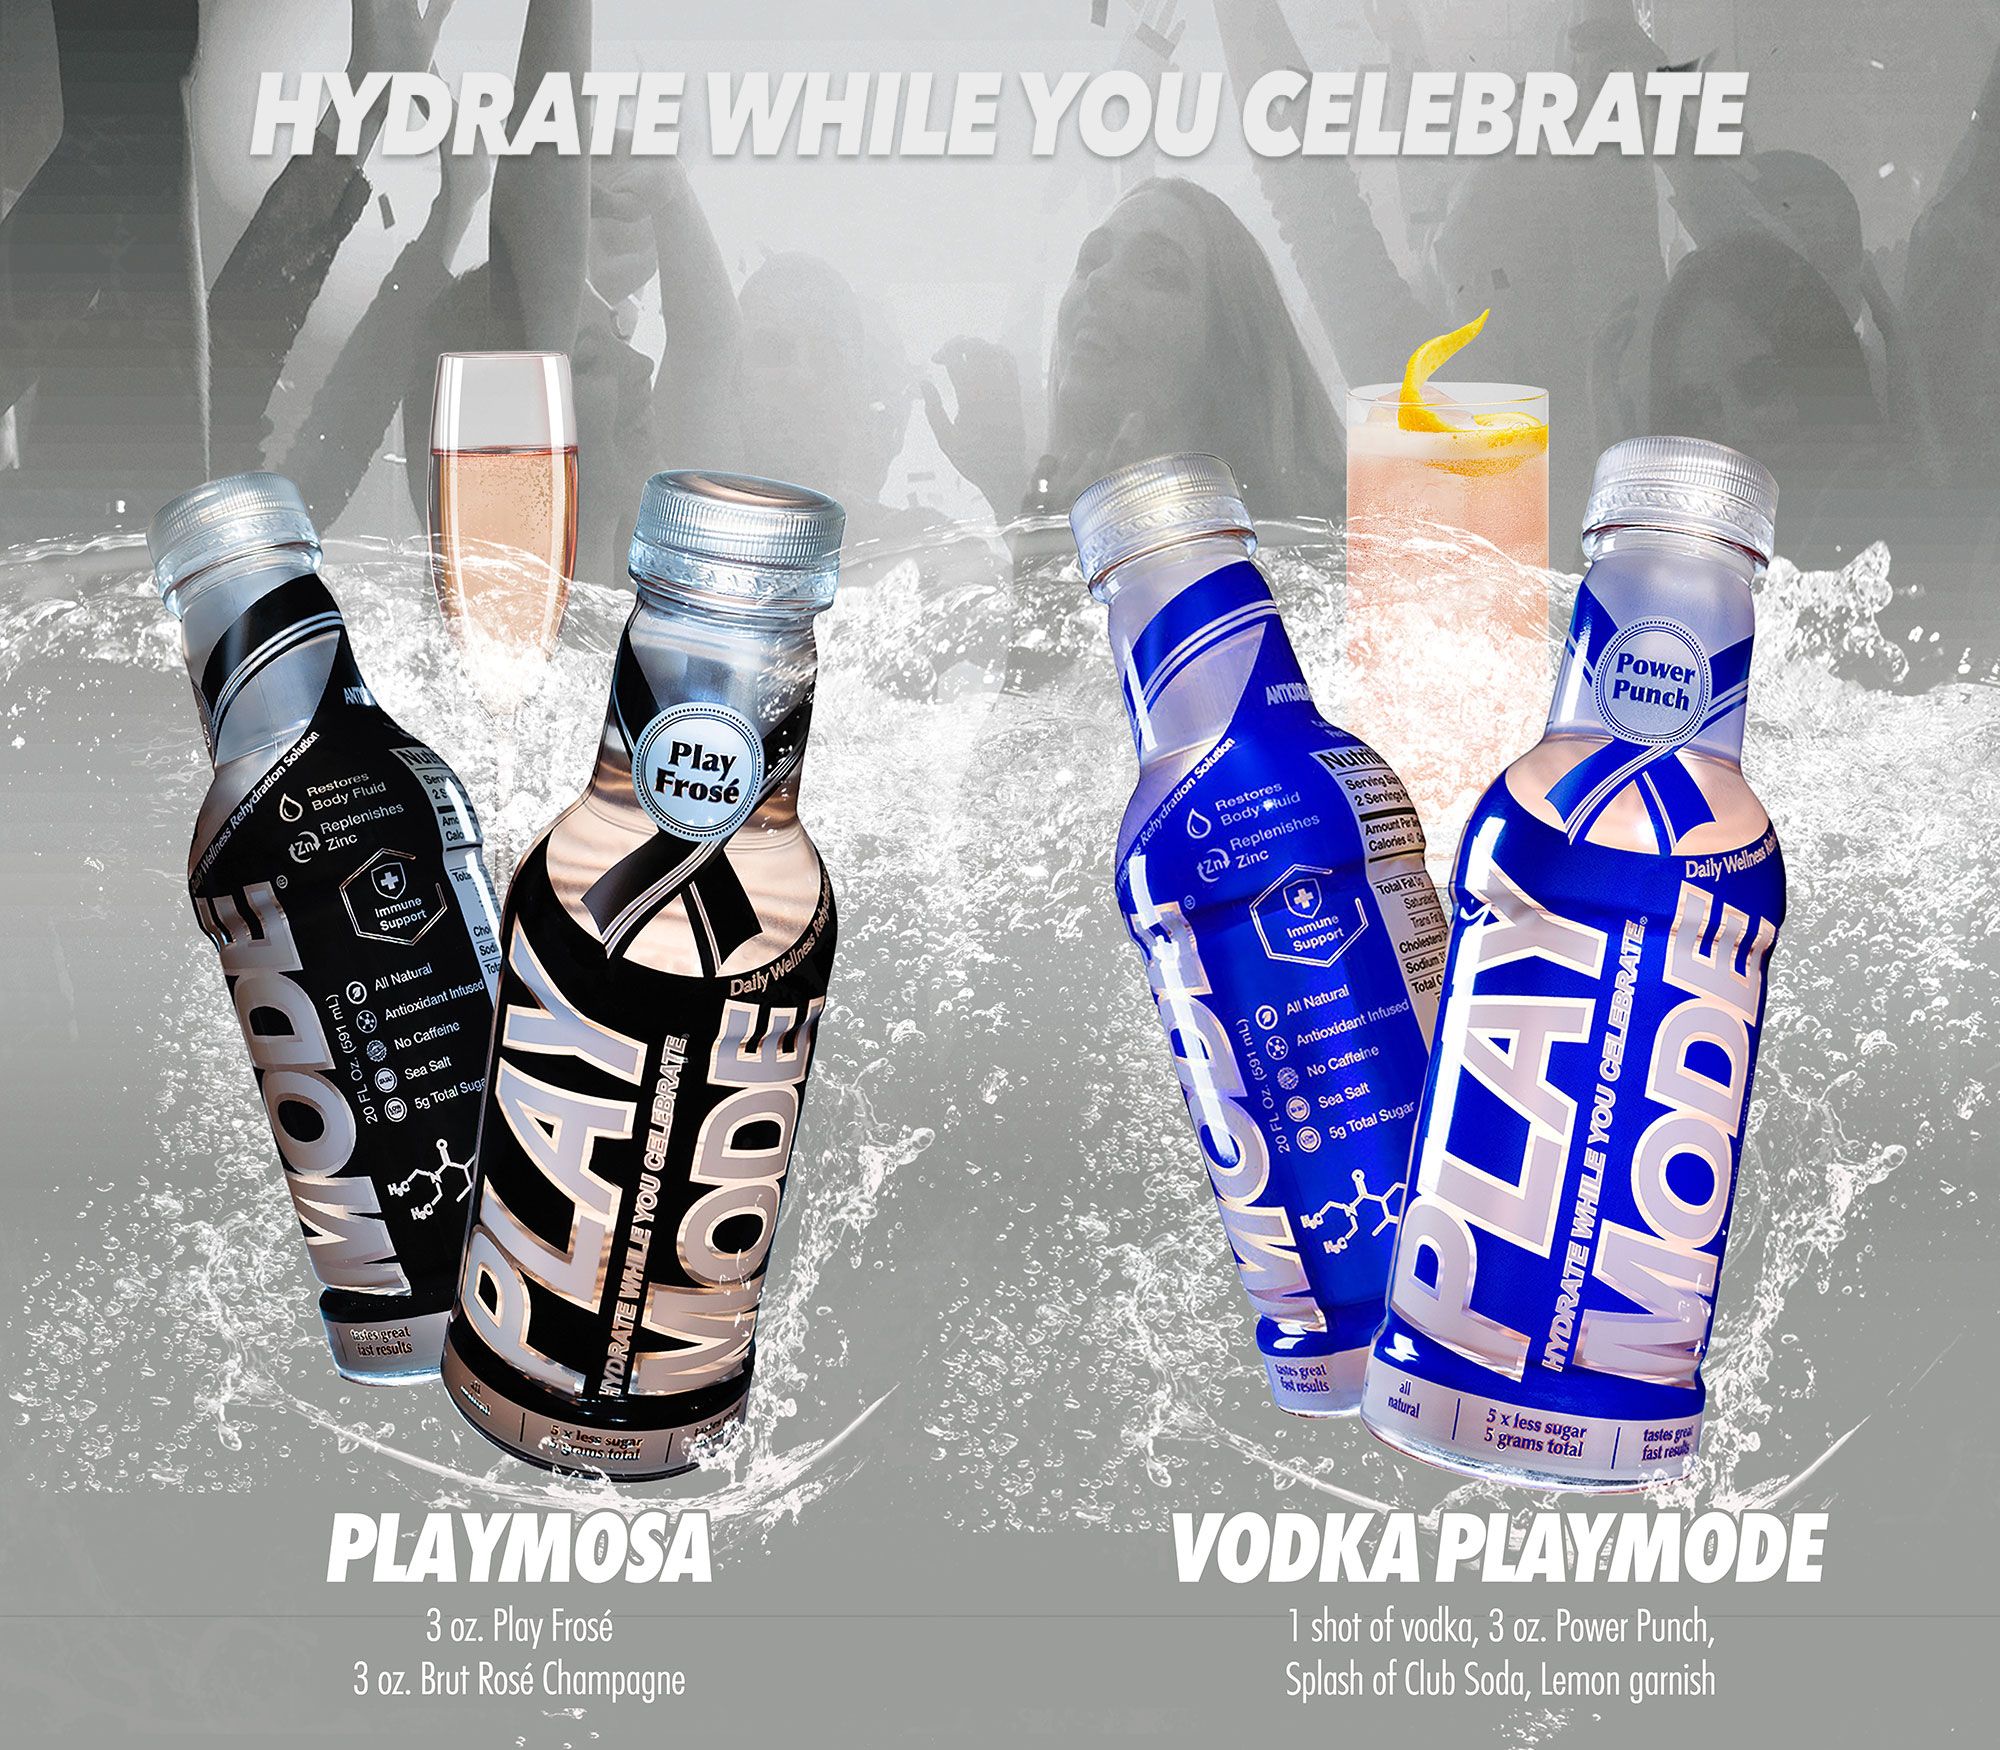 Hydrate While You Celebrate